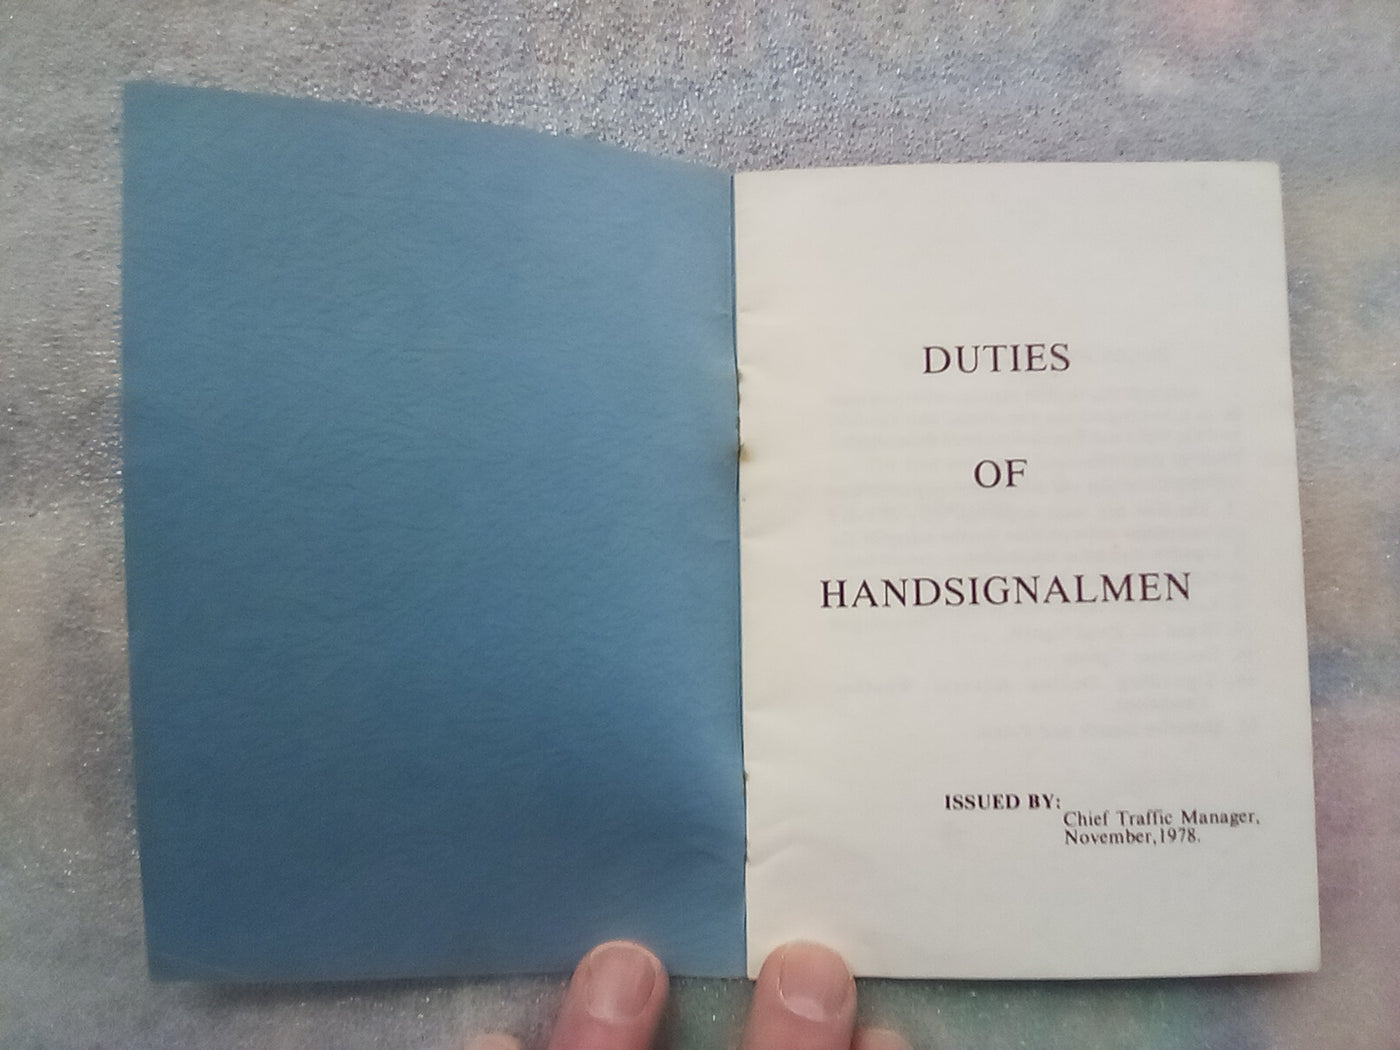 NZR Duties of Handsignalmen (November 1978)